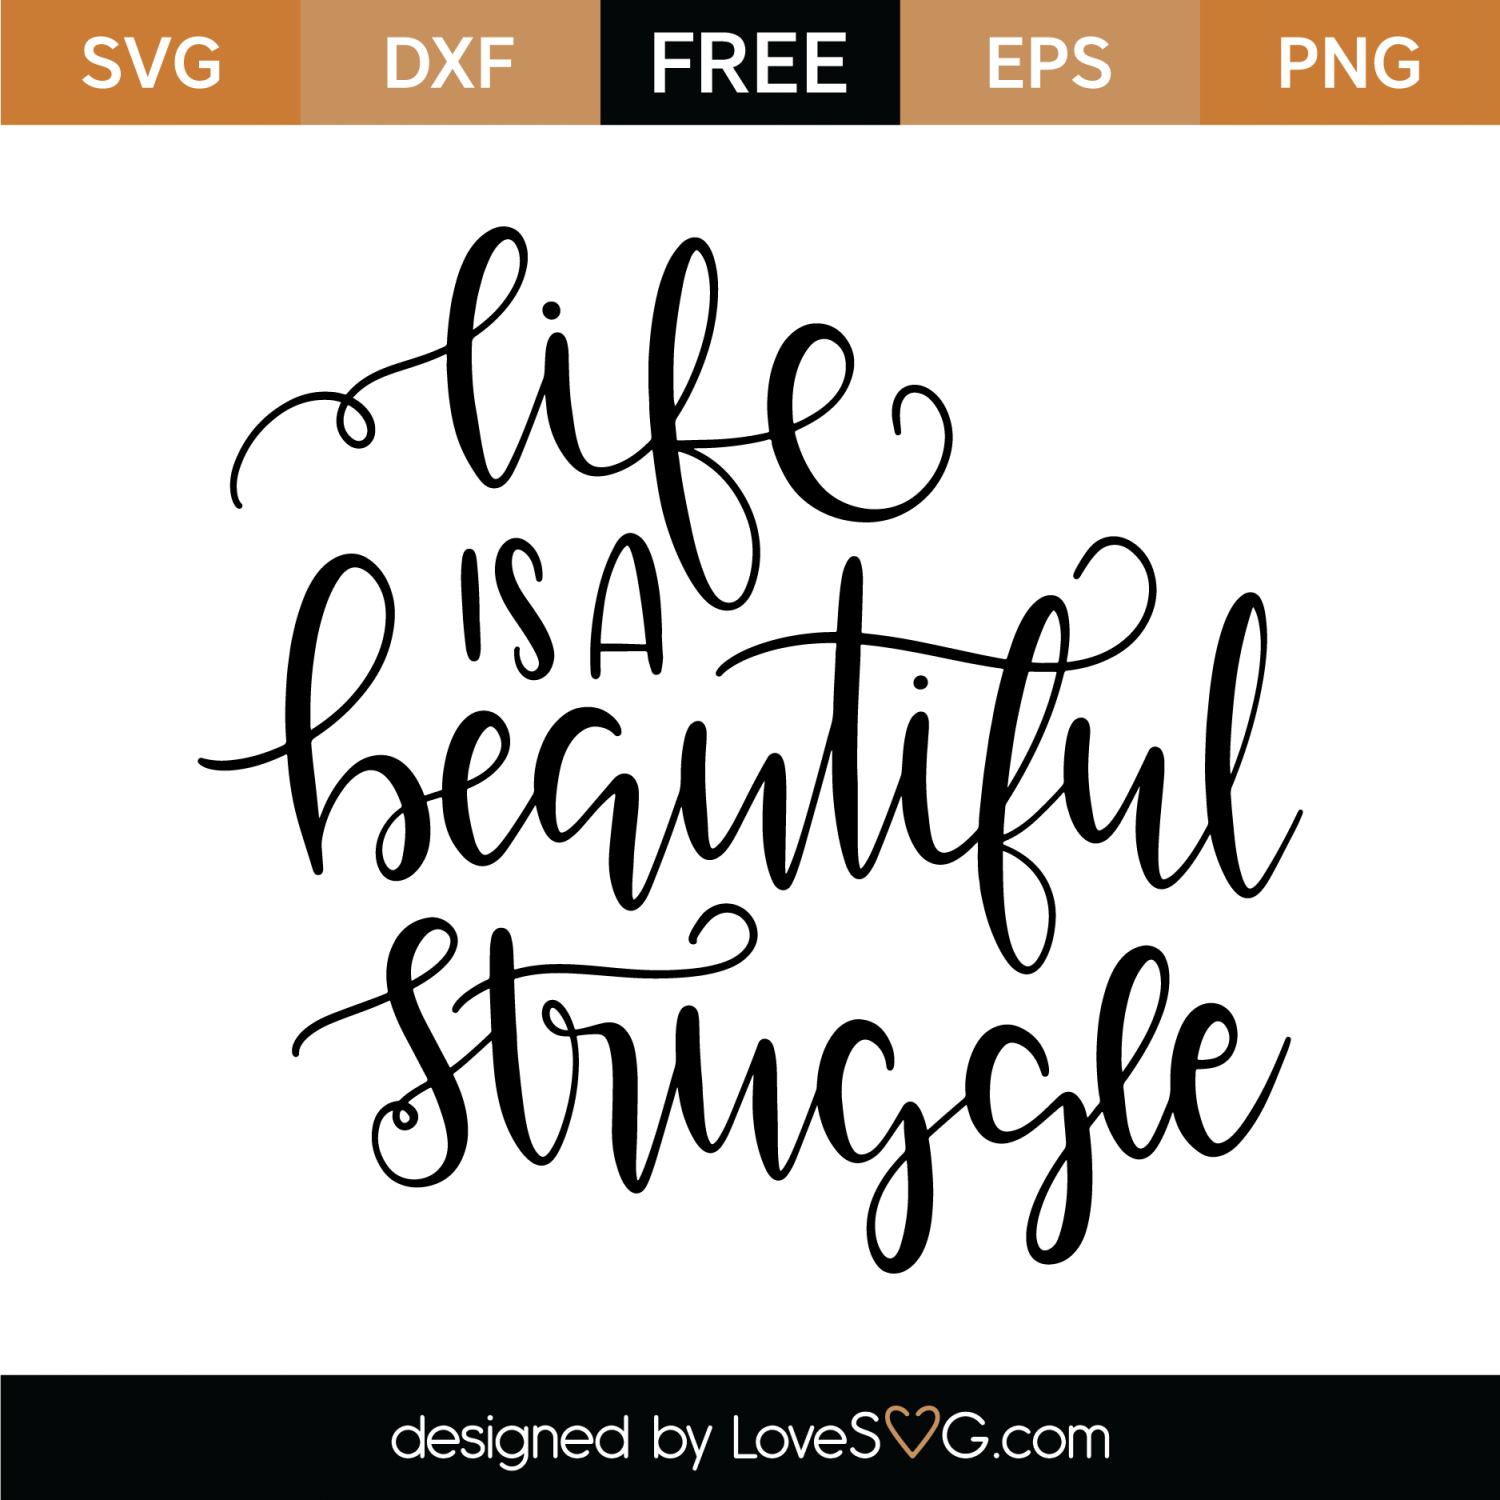 Download Free Life Is A Beautiful Struggle SVG Cut File | Lovesvg.com